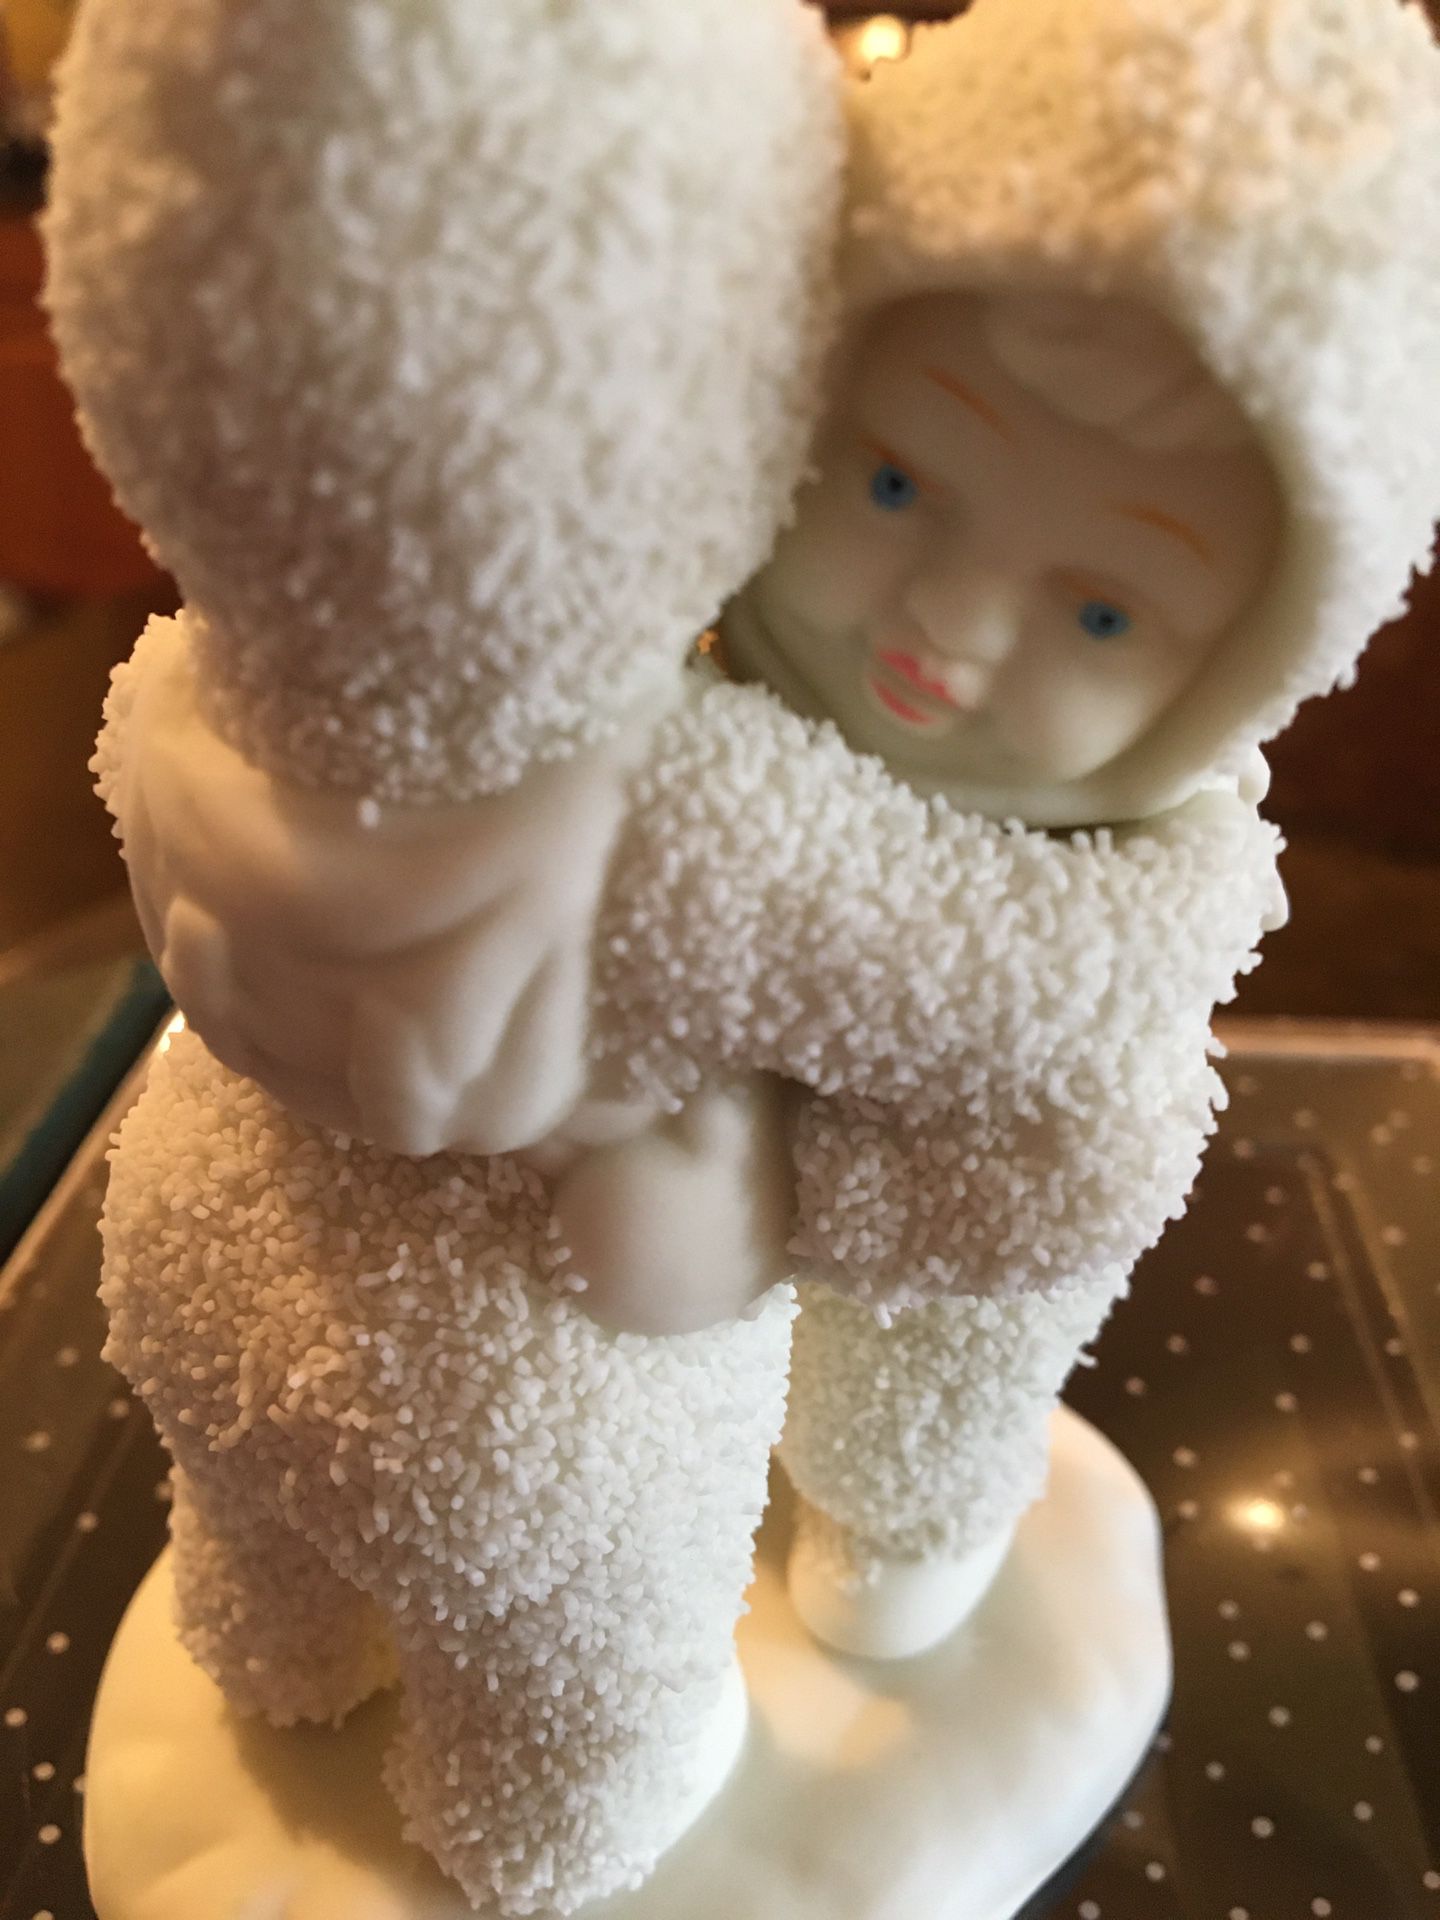 NEW Snowbabies Dept 56 figurine “I need a Hug” - Gift box included